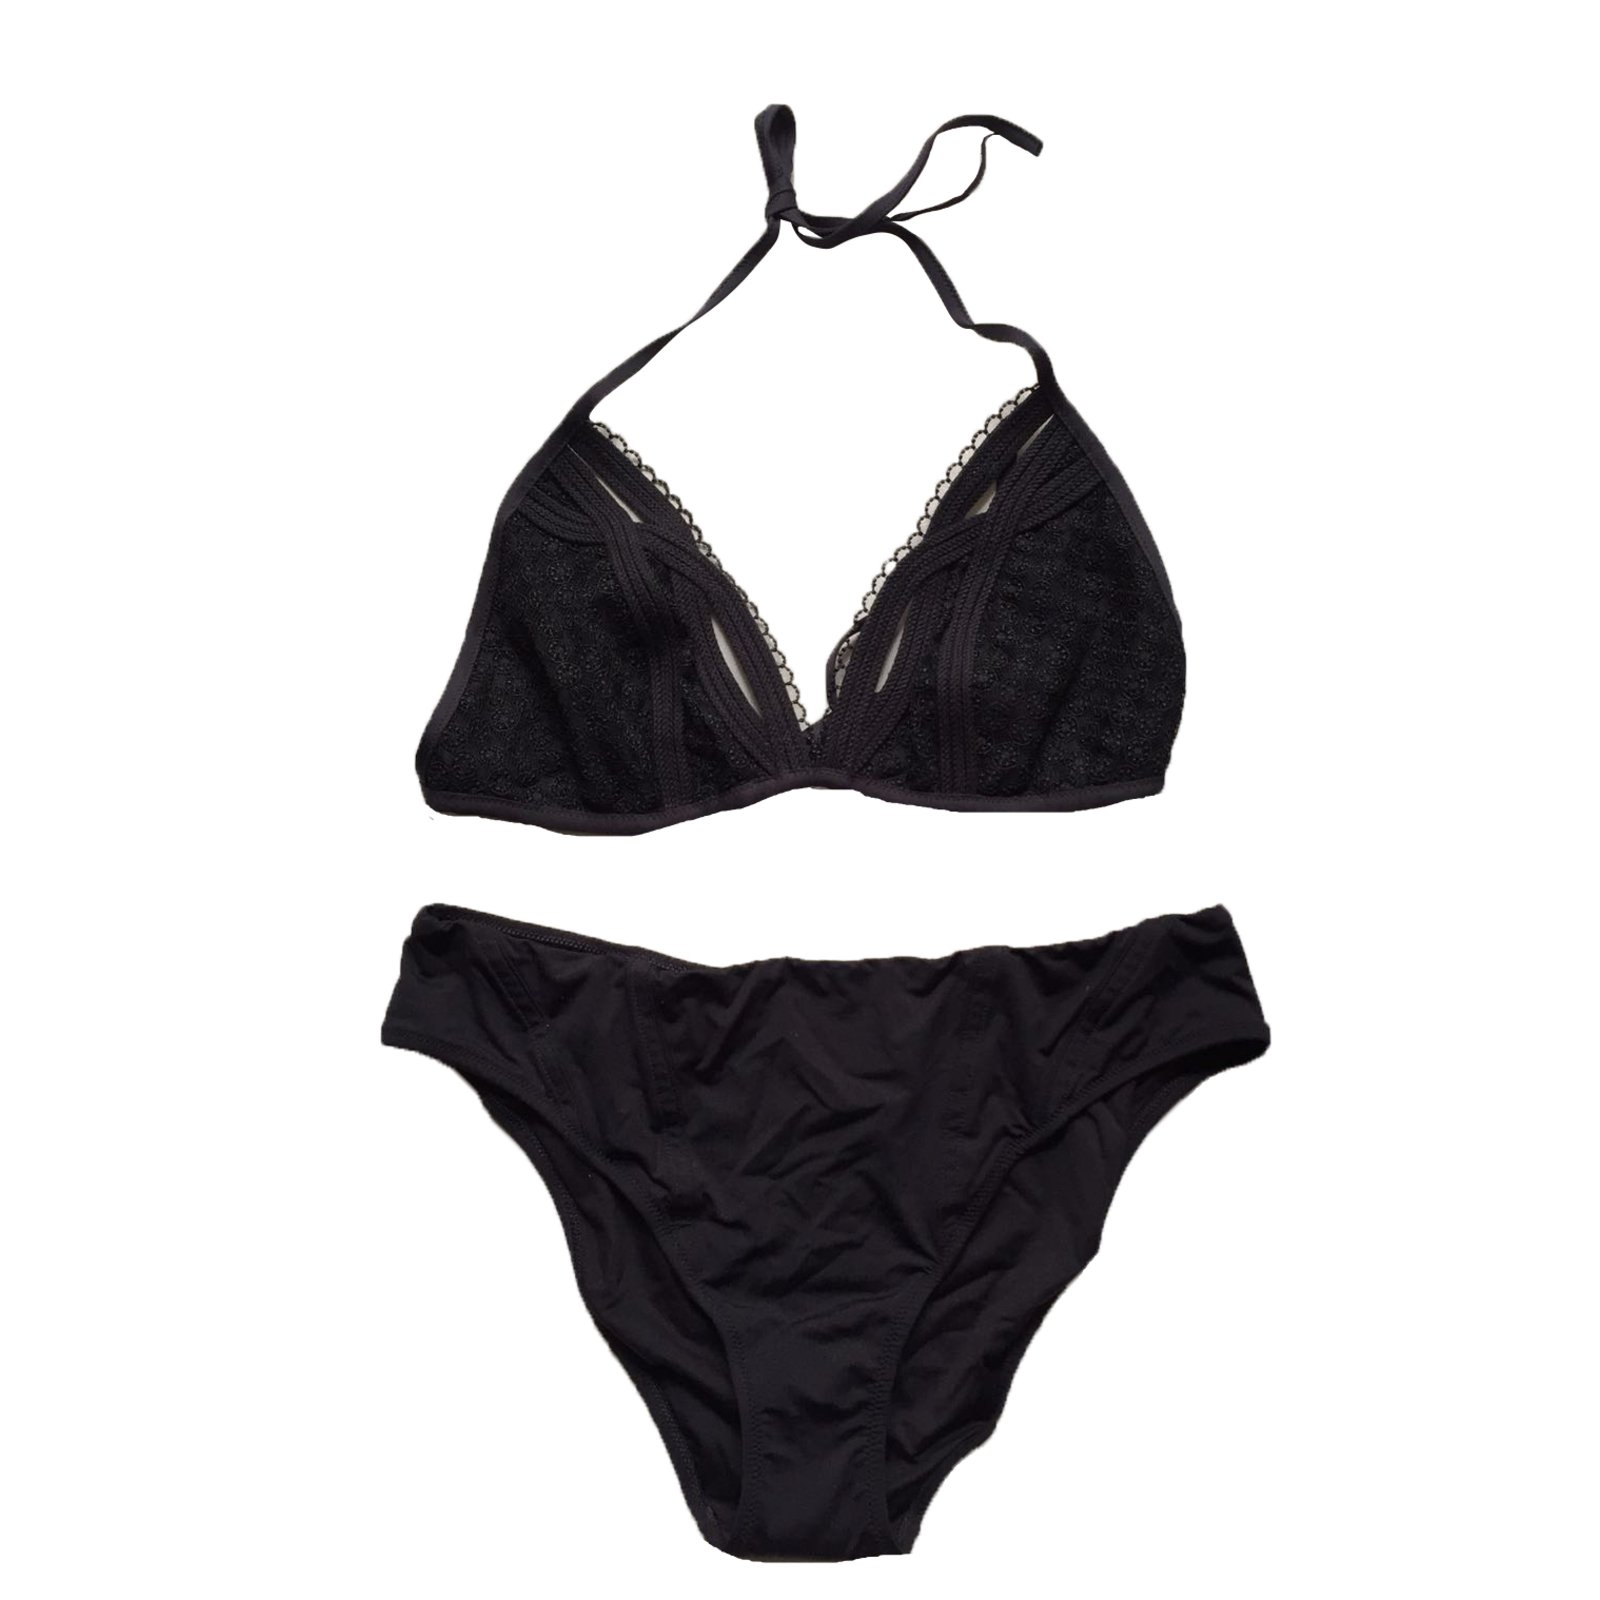 https://cdn1.jolicloset.com/imgr/full/2018/06/72141-1/la-perla-black-polyamide-swimwear.jpg